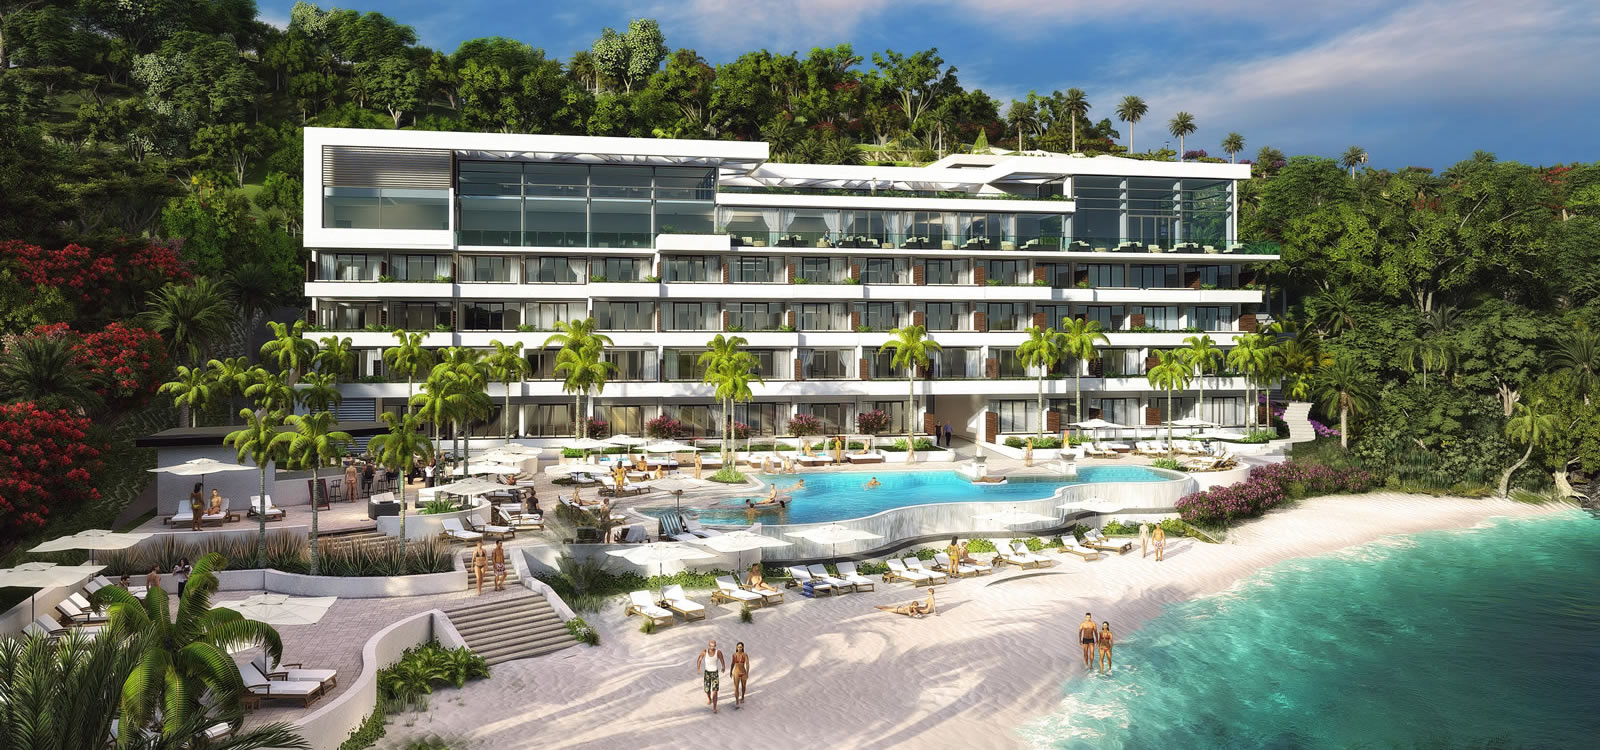 Beachfront Hotel Condos For Sale Grand Anse Beach Grenada